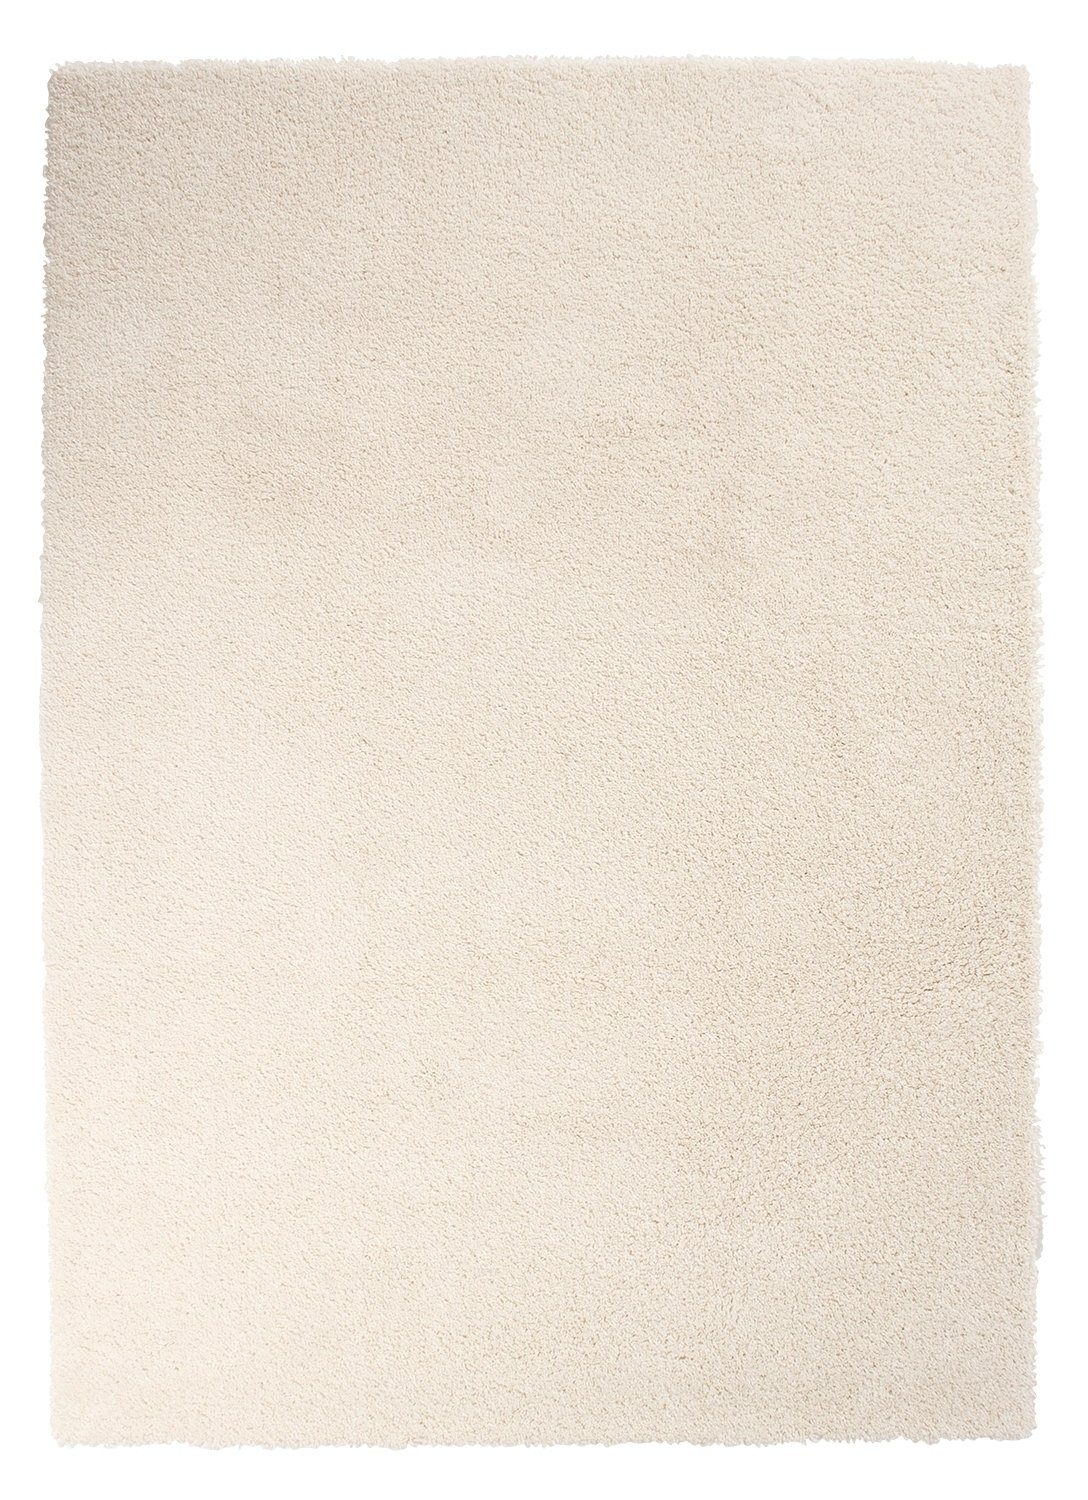 Teppich DELIGHT COSY, Polypropylen, Weiß, 80 x 150 cm, Balta Rugs, rechteckig, Höhe: 22 mm